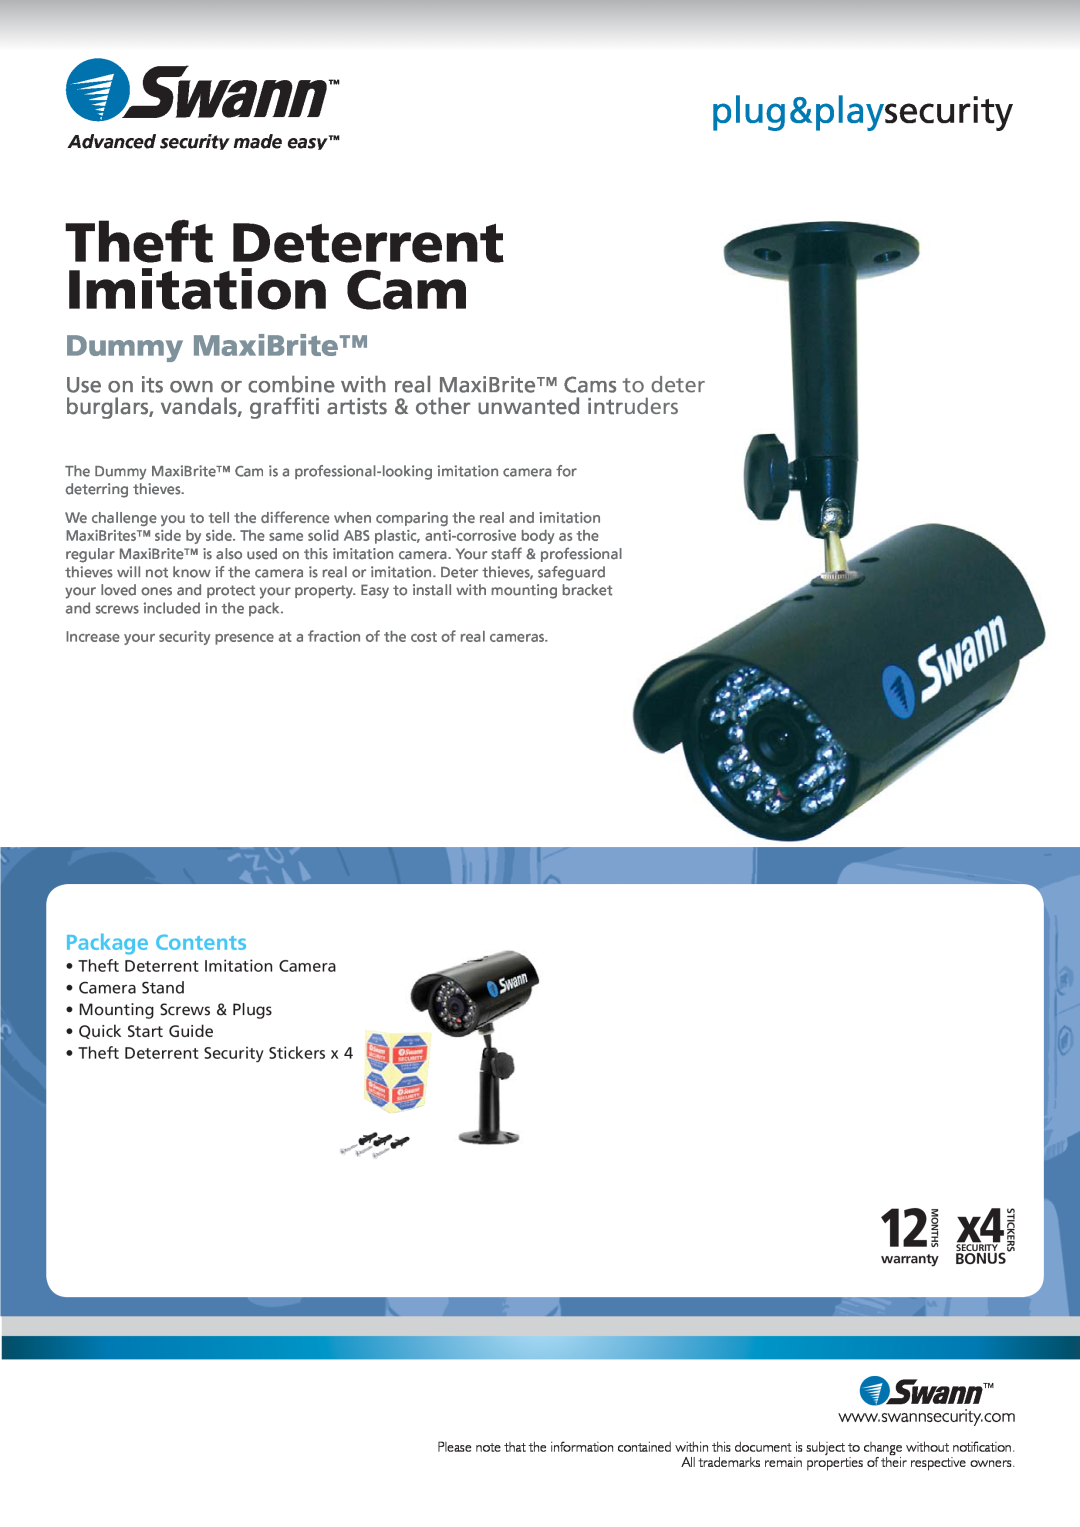 Swann SW215-DMX manual Bonus, Theft Deterrent Imitation Cam, plug&playsecurity, Dummy MaxiBrite, Package Contents 